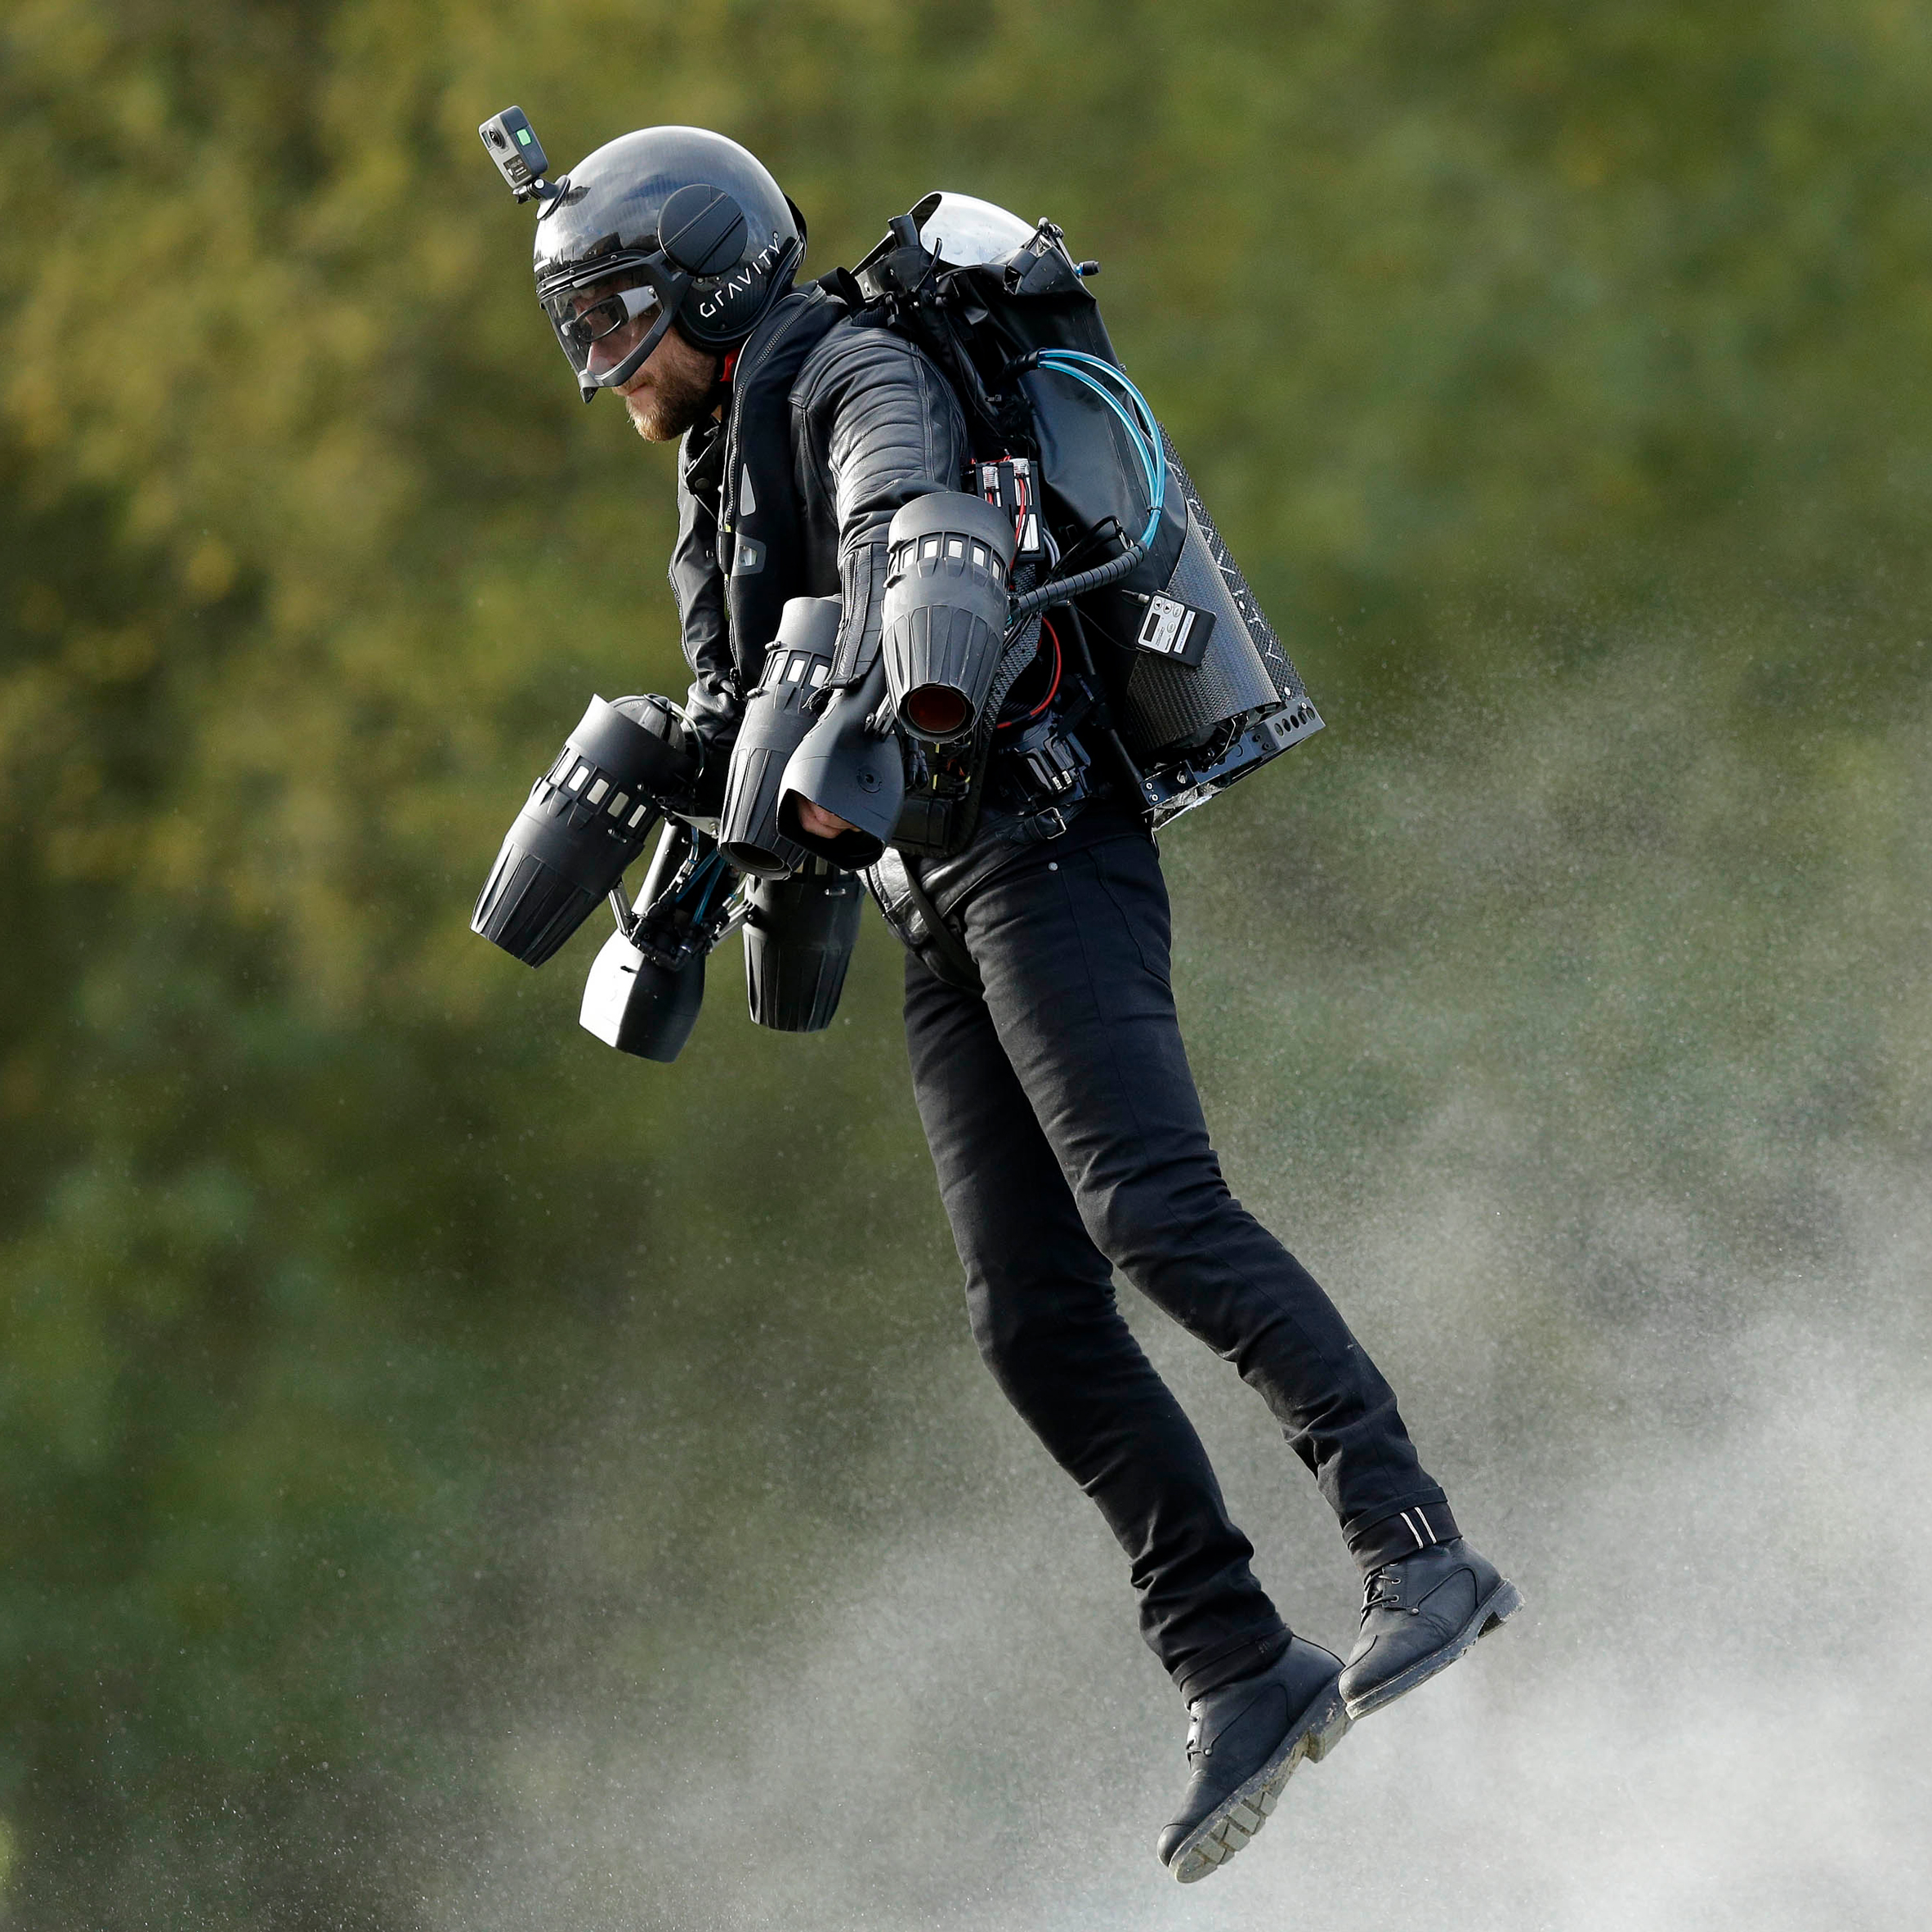 Incredible Iron-man suit flies at 150mph